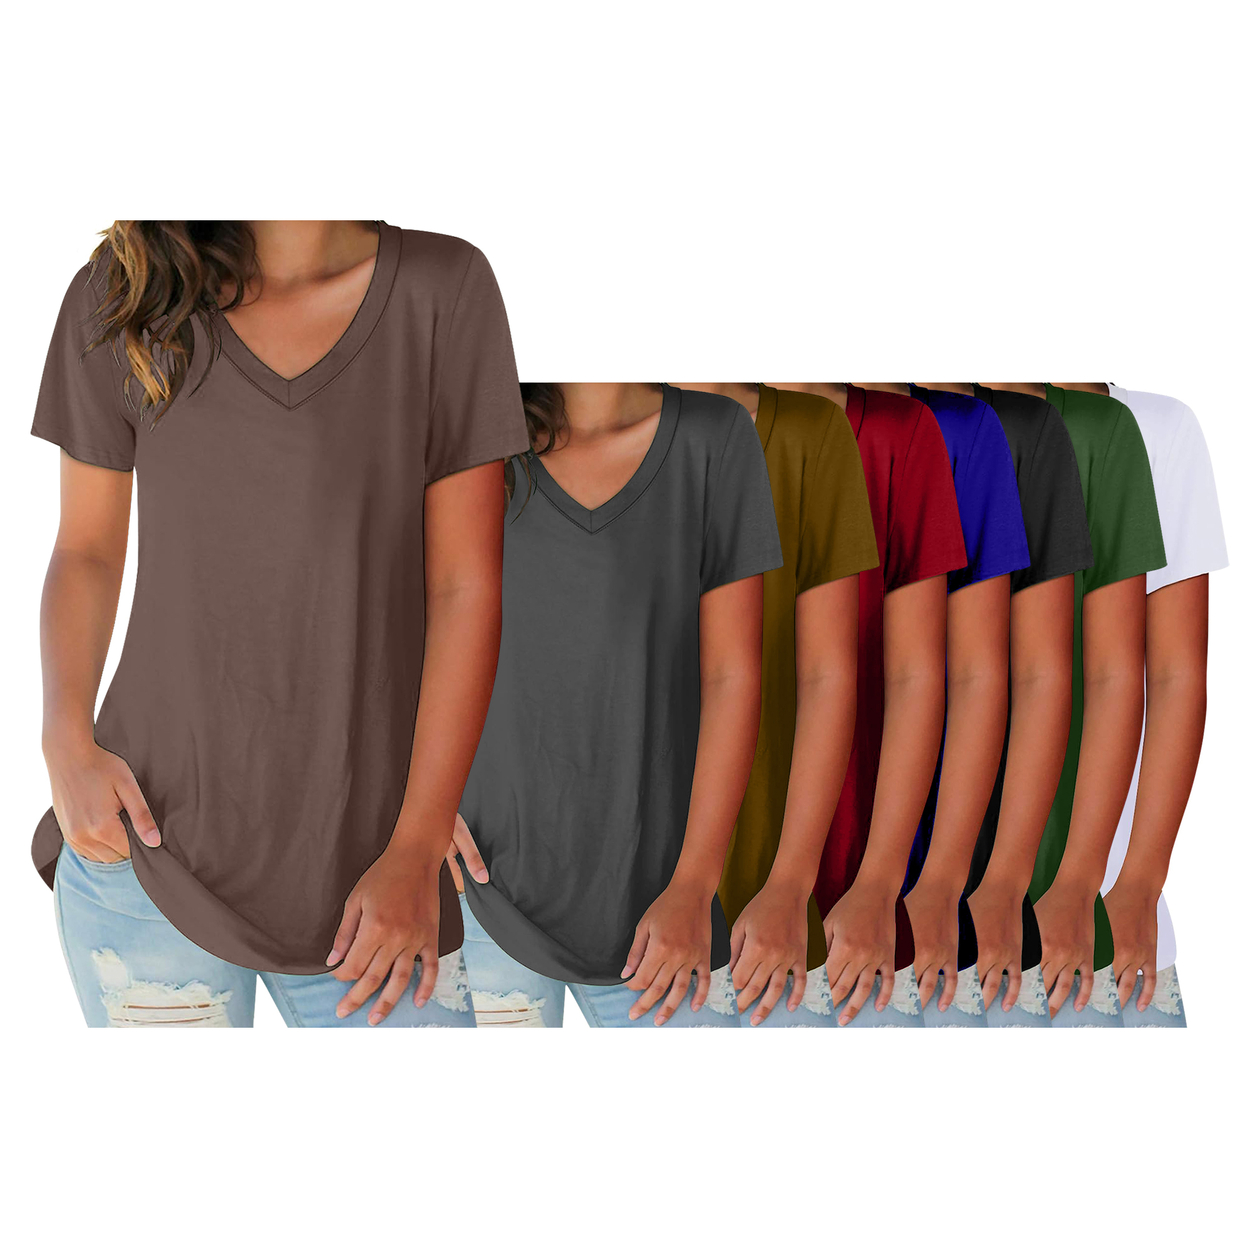 3-Pack: Women's Ultra Soft Smooth Cotton Blend Basic V-Neck Short Sleeve Shirts - Black, Navy, Brown, Xx-large